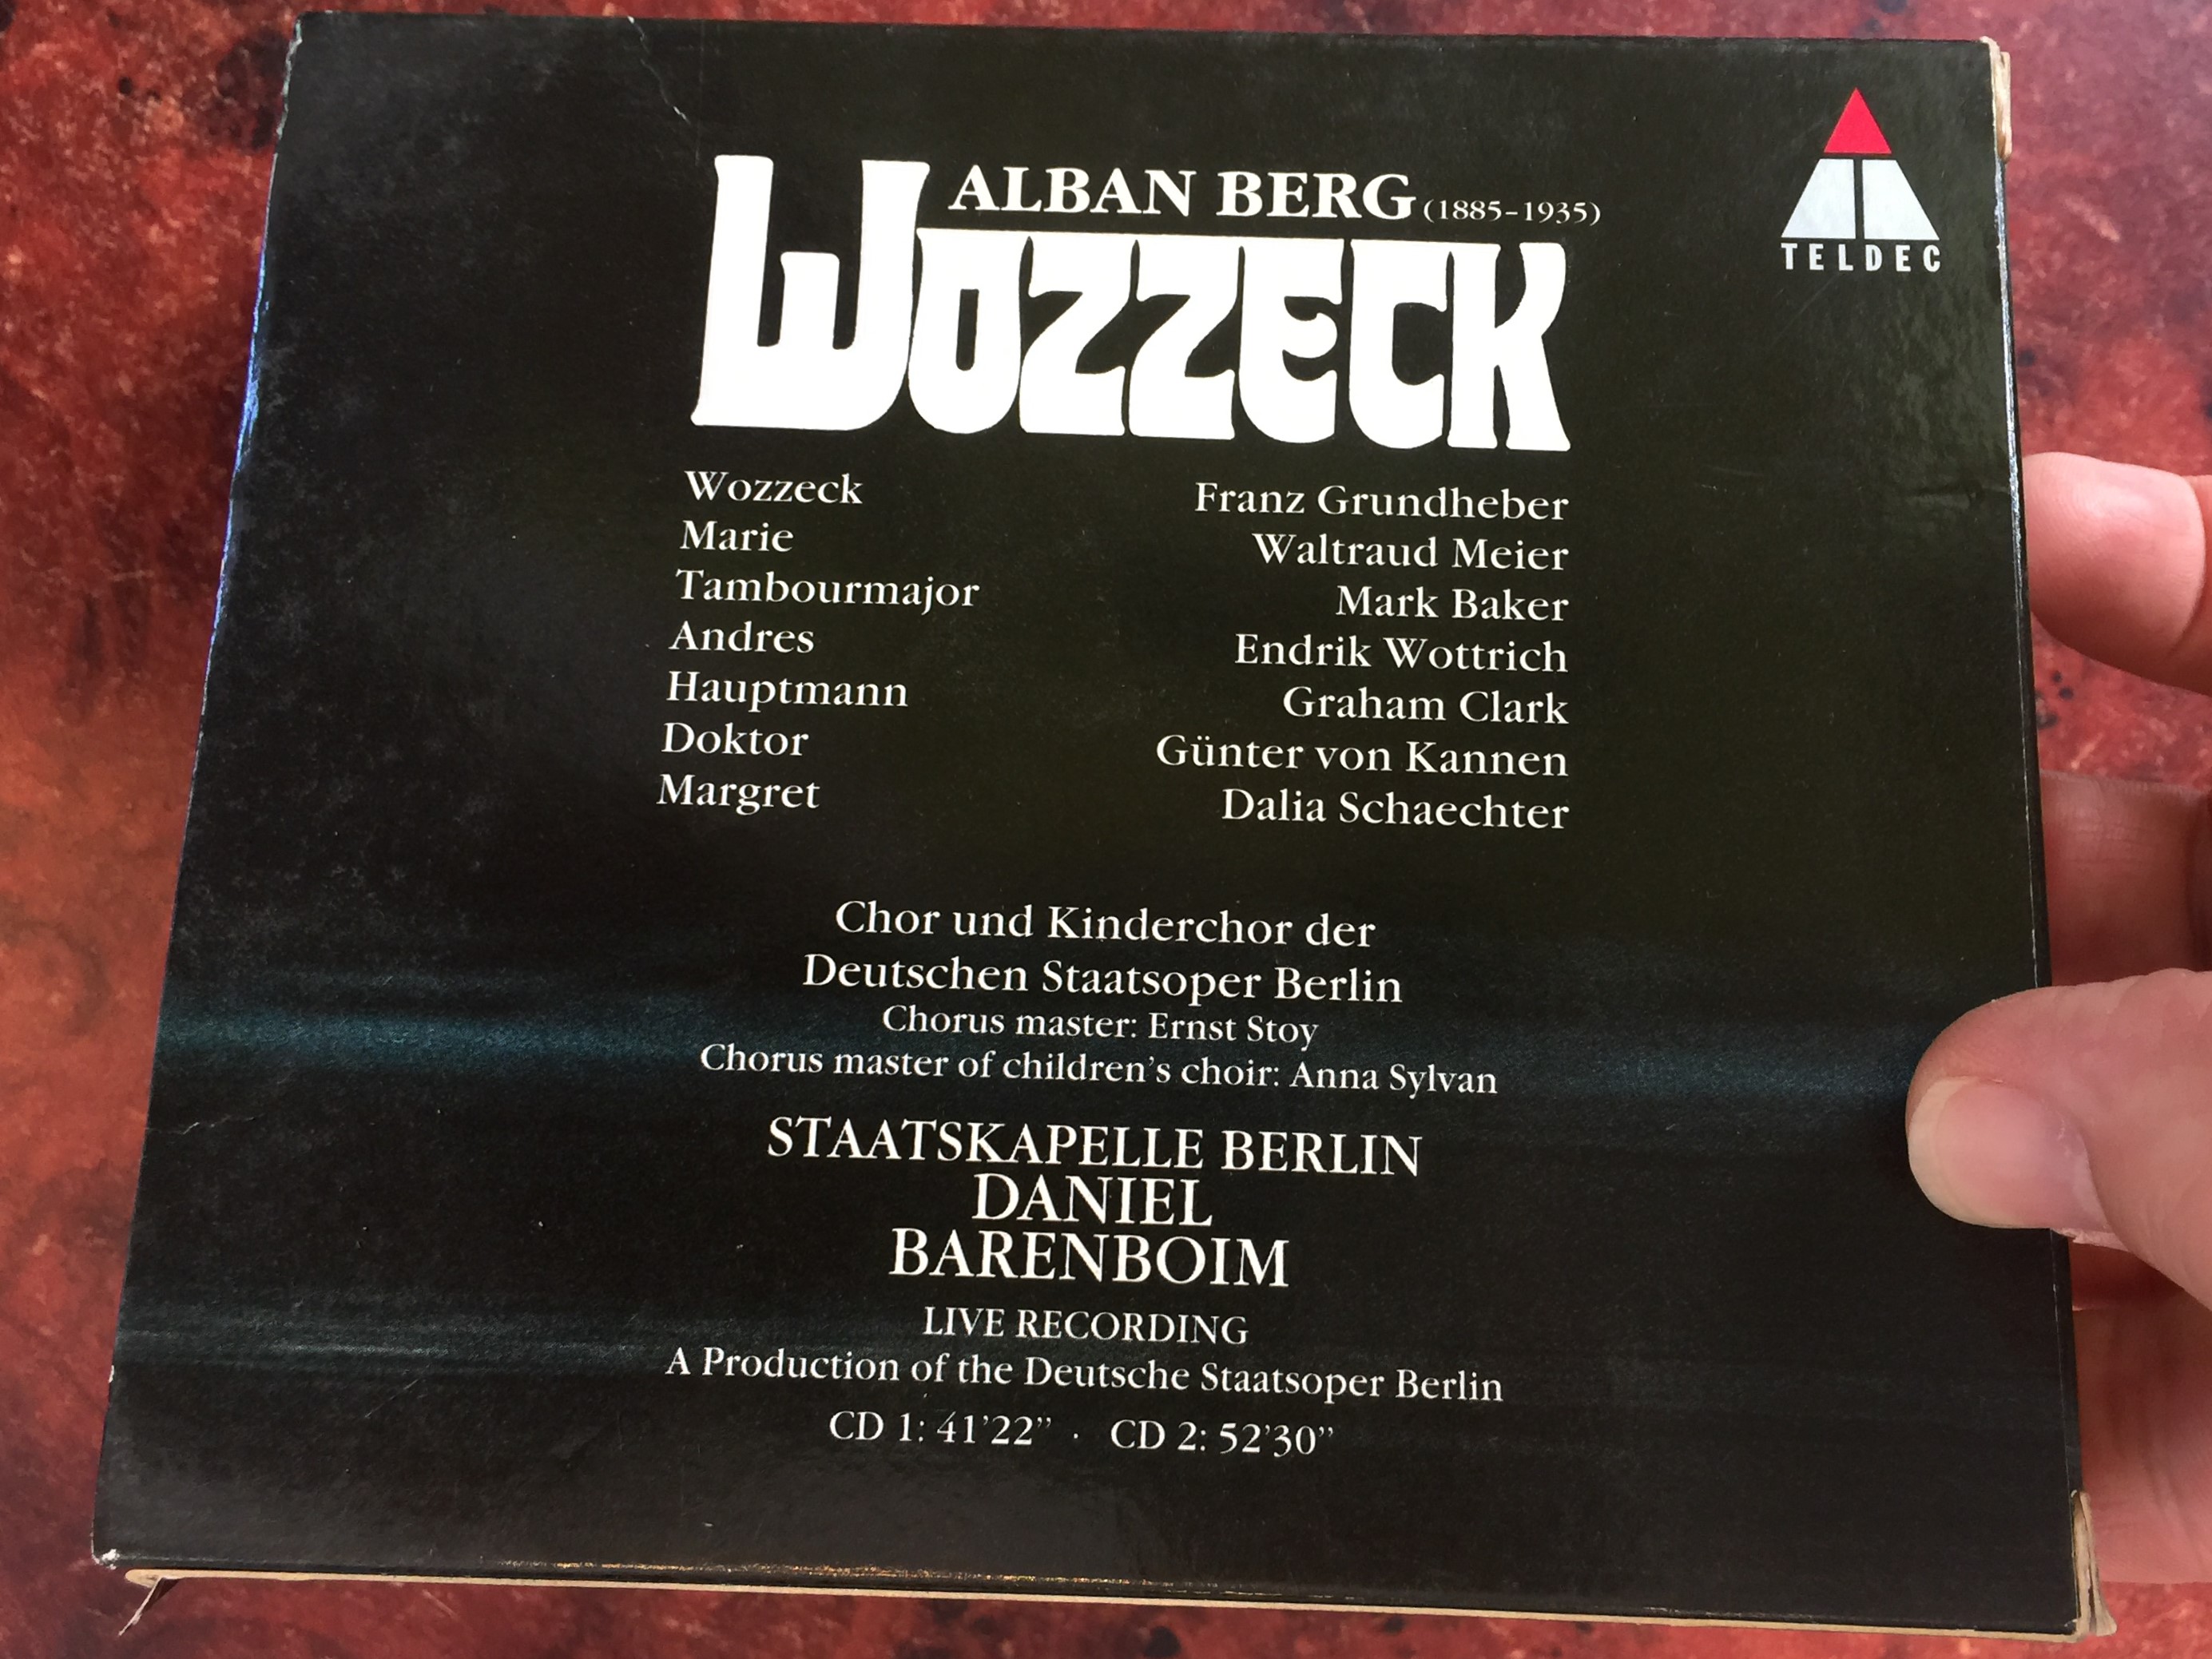 alban-berg-wozzeck-grundheber-meier-baker-clark-wottrich-von-kannen-chor-der-deutschen-staatsoper-berlin-staatskapelle-berlin-daniel-barenboim-teldec-classics-2x-audio-cd-1996-bo.jpg